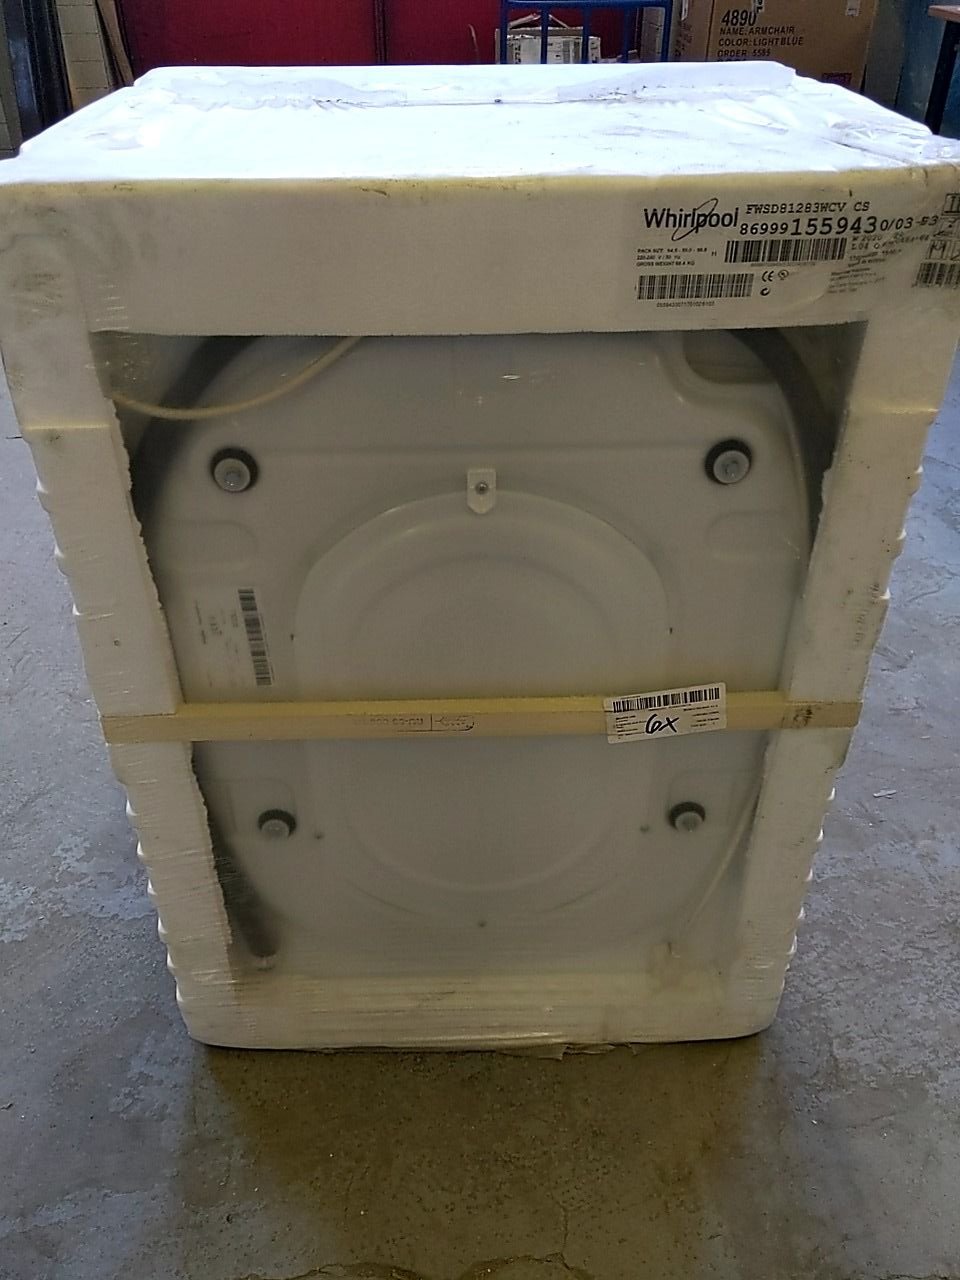 Pračka Whirlpool FWSD81283WCV CS